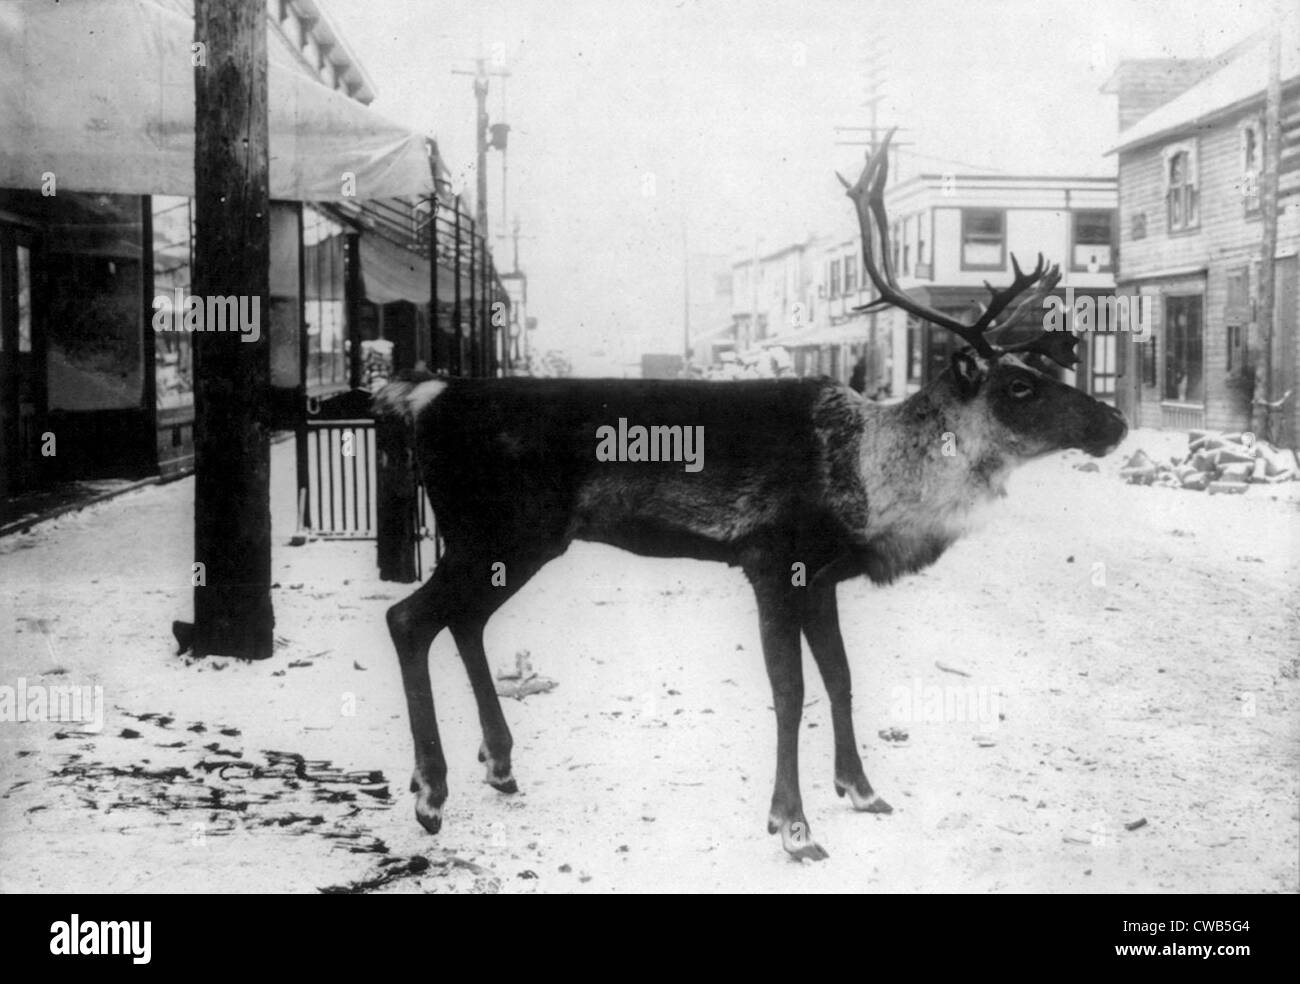 Taxidermy, stuffed reindeer on street, a butcher's sign, Dawson, Yukon Territory, Canada, photograph, circa 1900-1923 Stock Photo